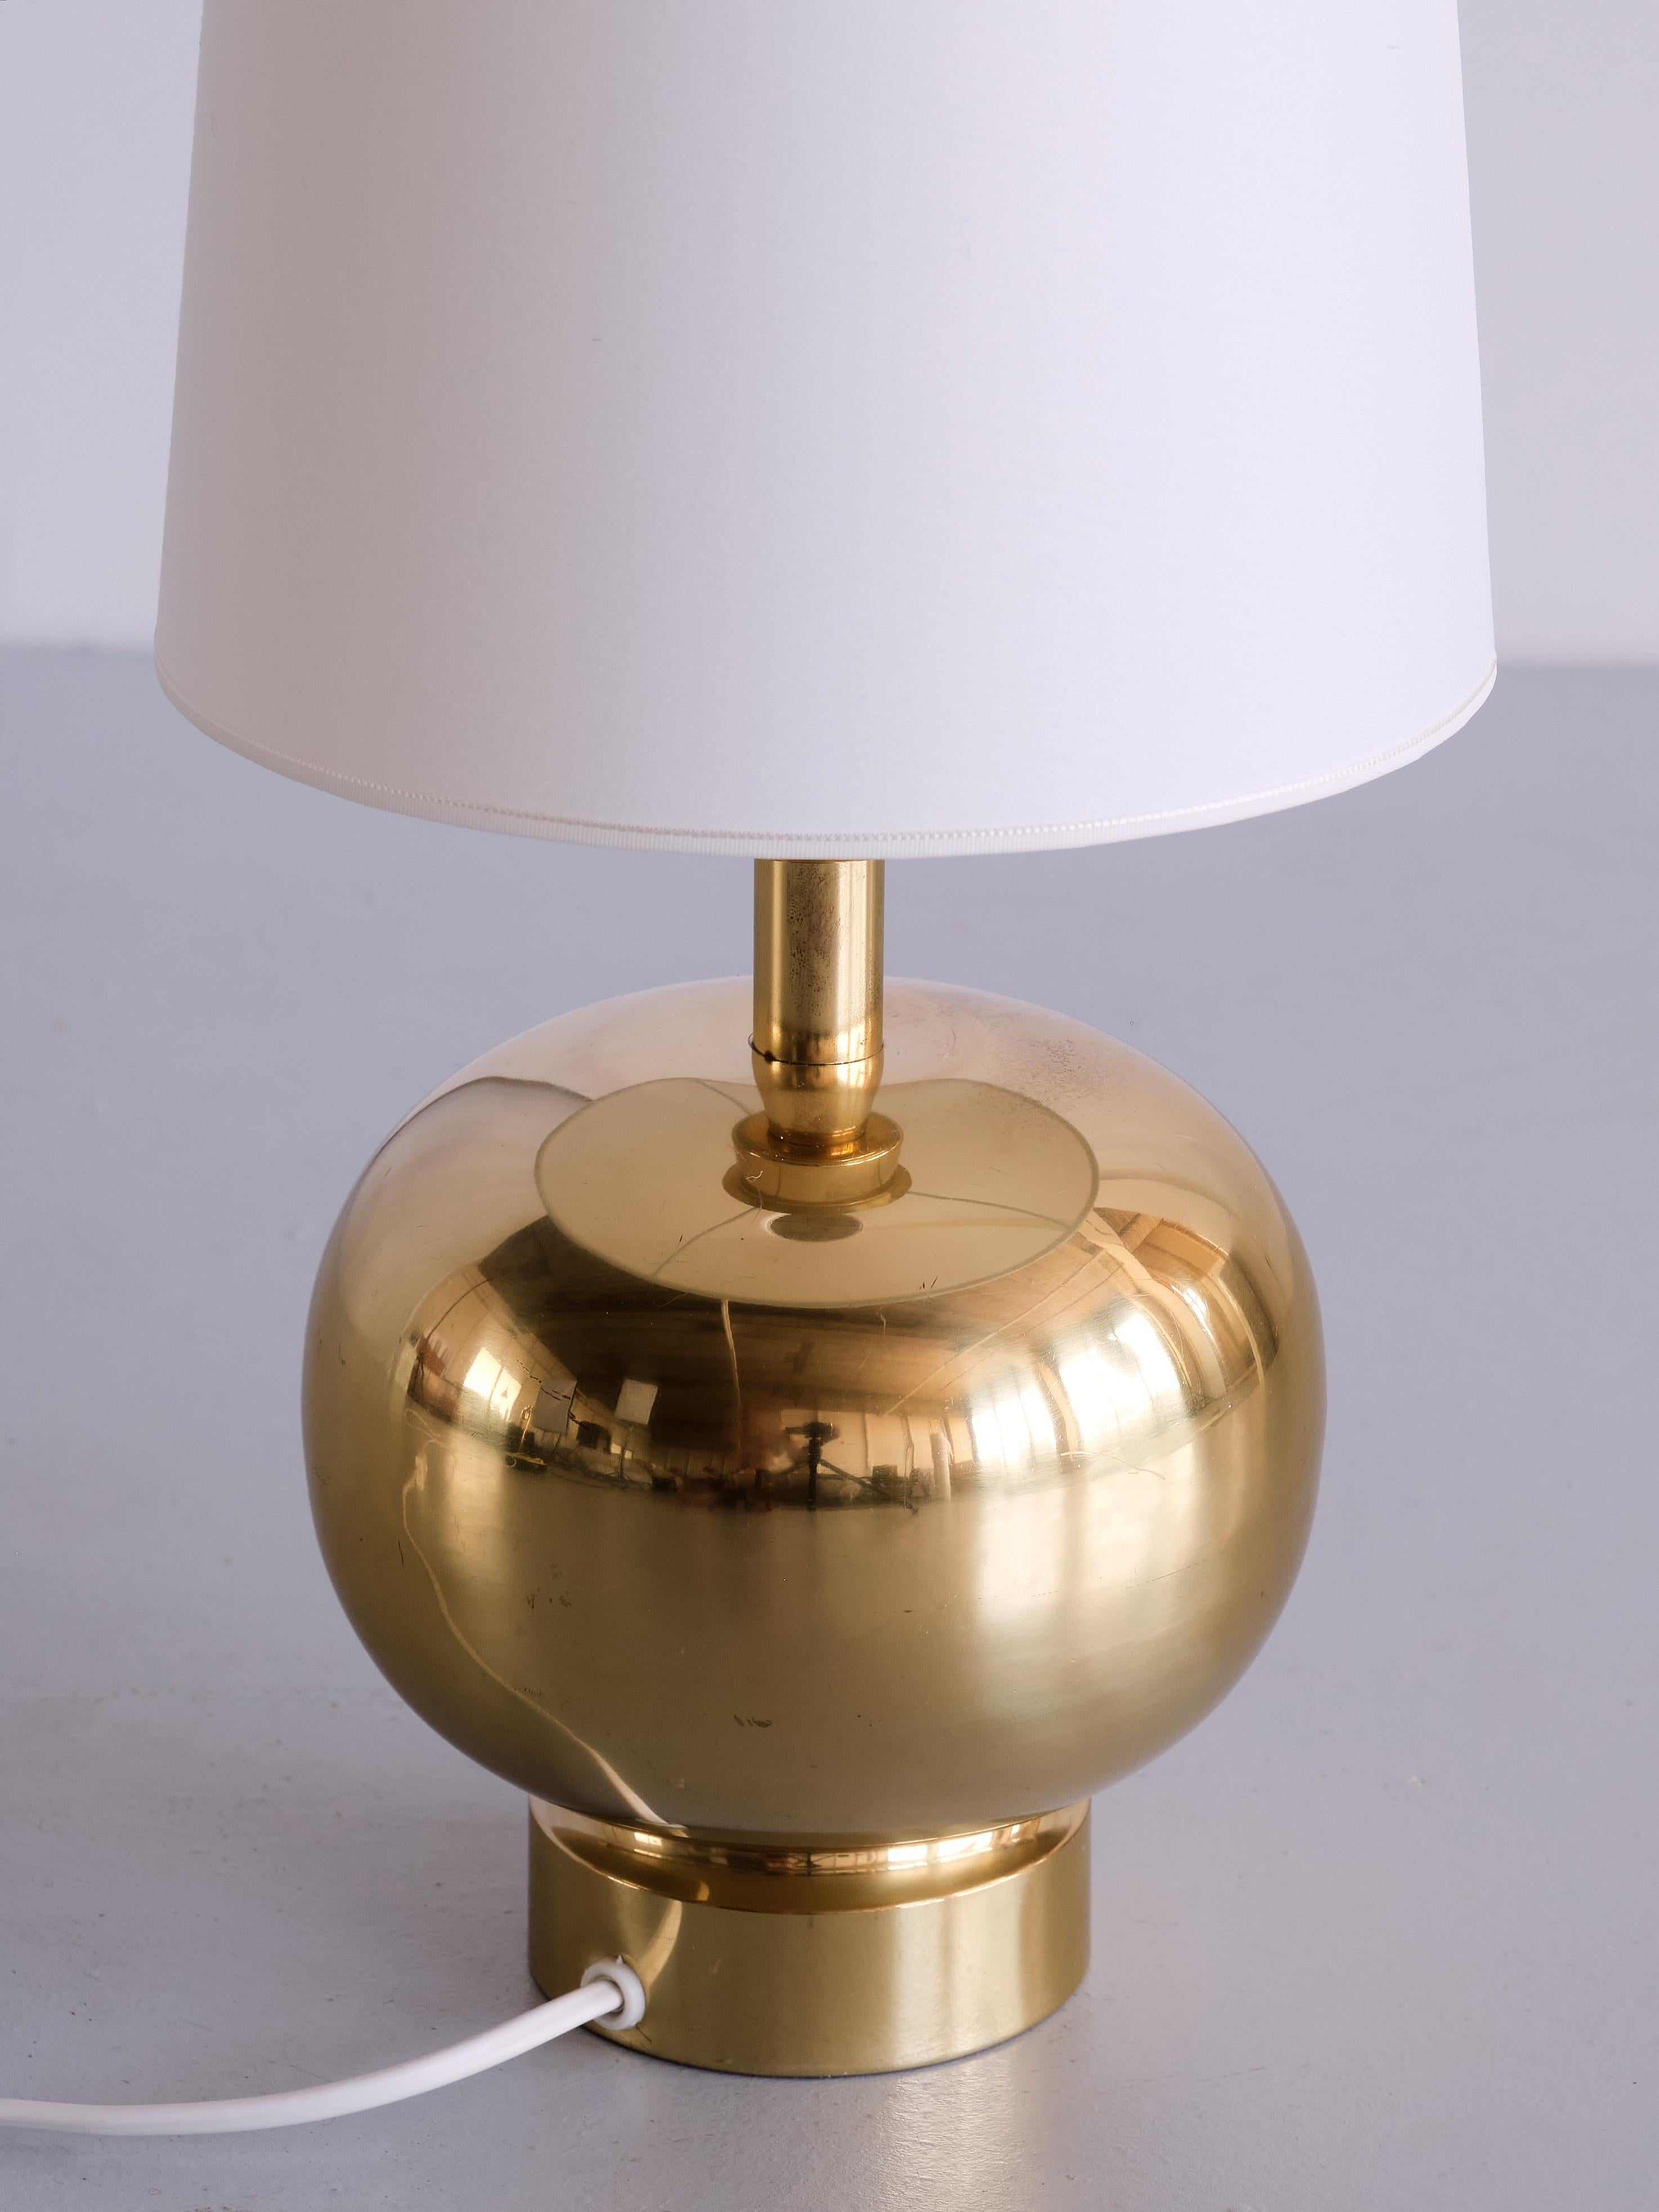 Late 20th Century Swedish Modern Brass Table Lamp by Aneta Belysning, Växjö, Sweden, 1970s For Sale